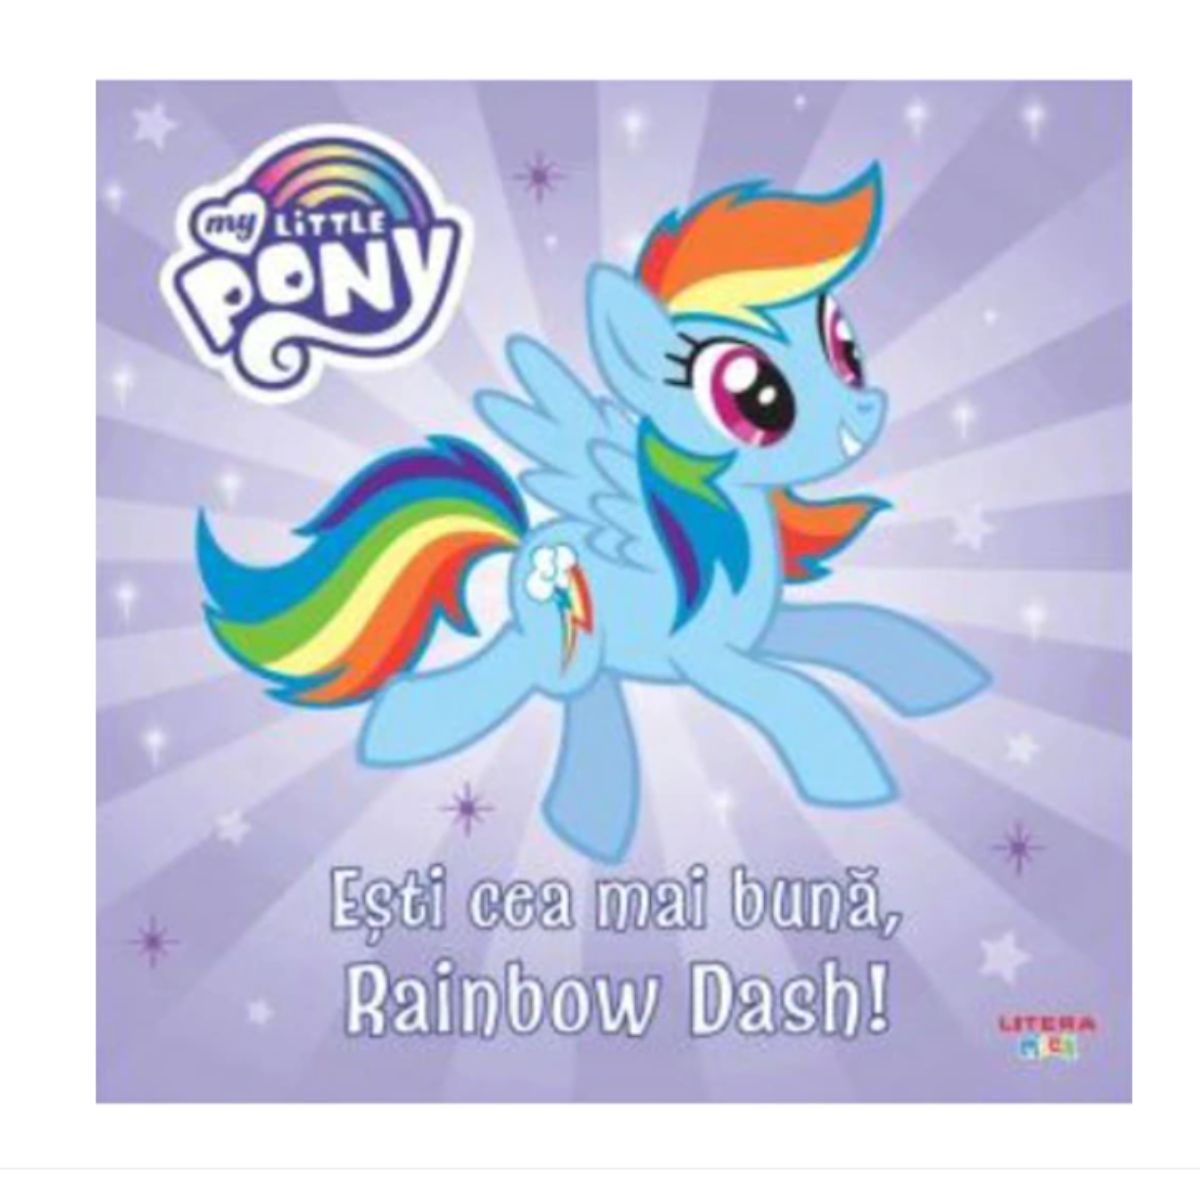 My Little Pony. Esti cea mai buna, Rainbow Dash!